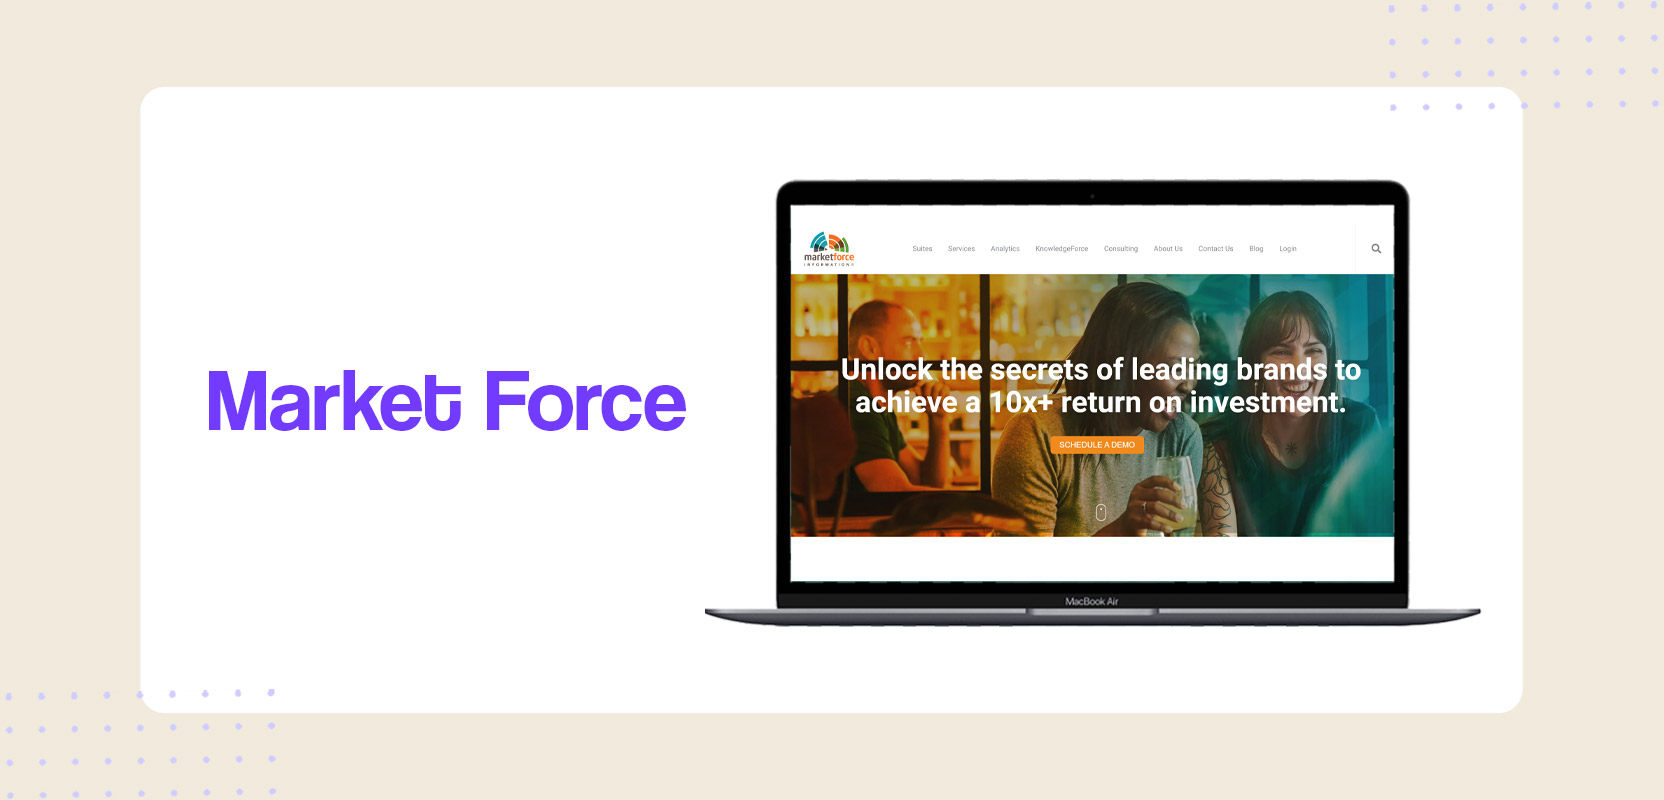 Laptop screen showing the Market Force website